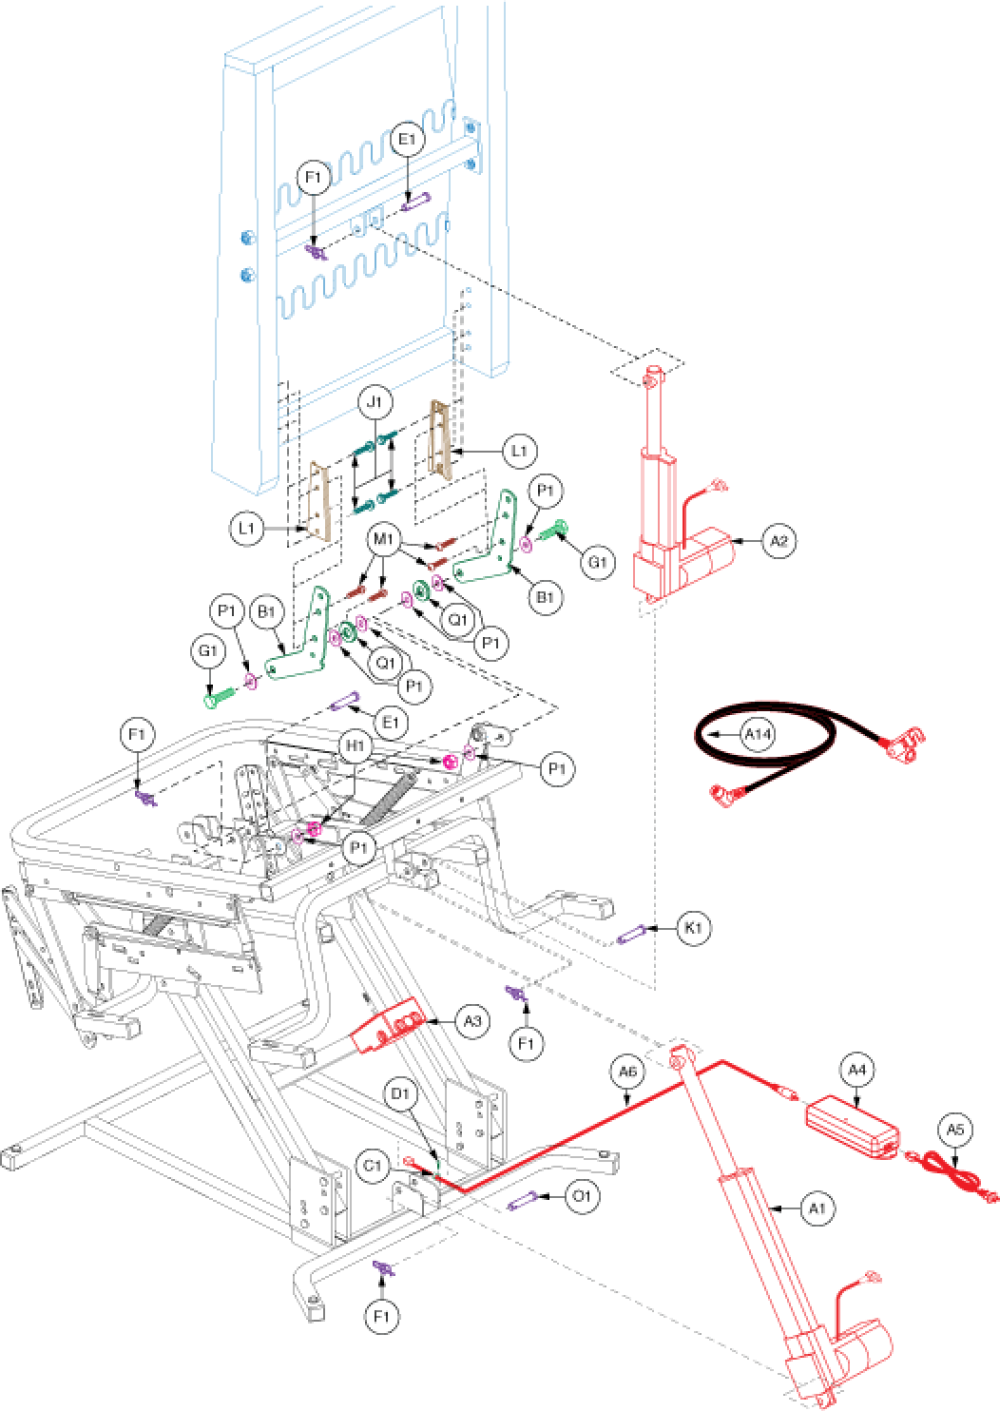 Motor Assembly - Sr525 Upgrade parts diagram